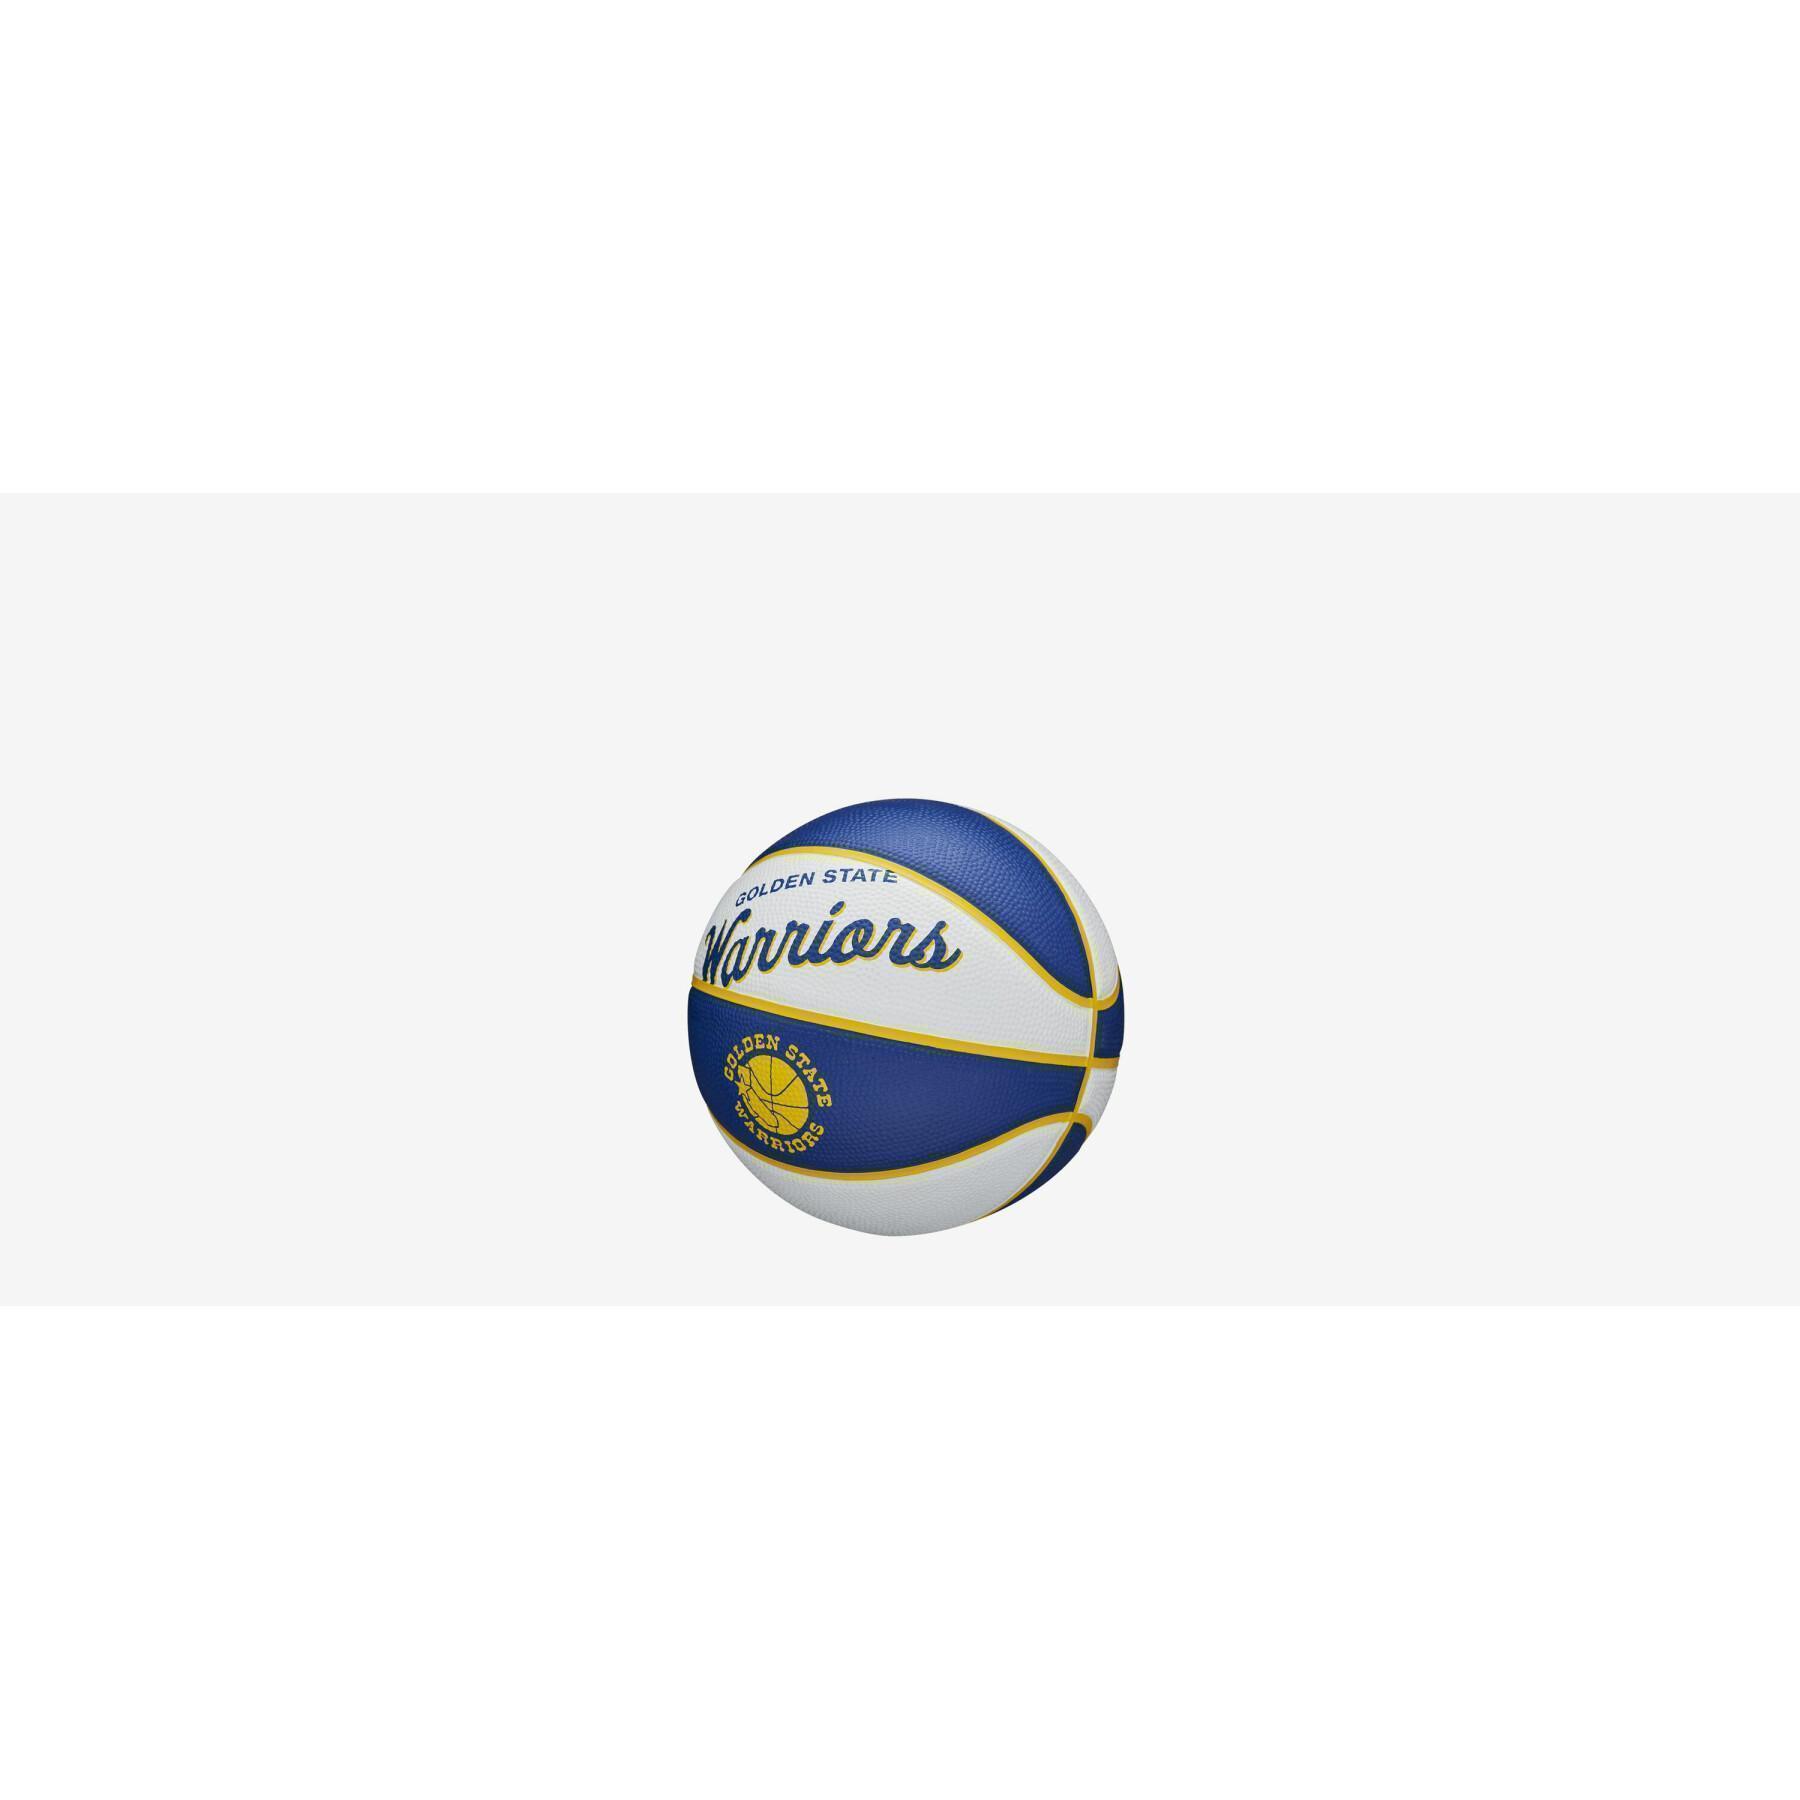 Mini globo Golden State Warriors Nba Team Retro 2021/22